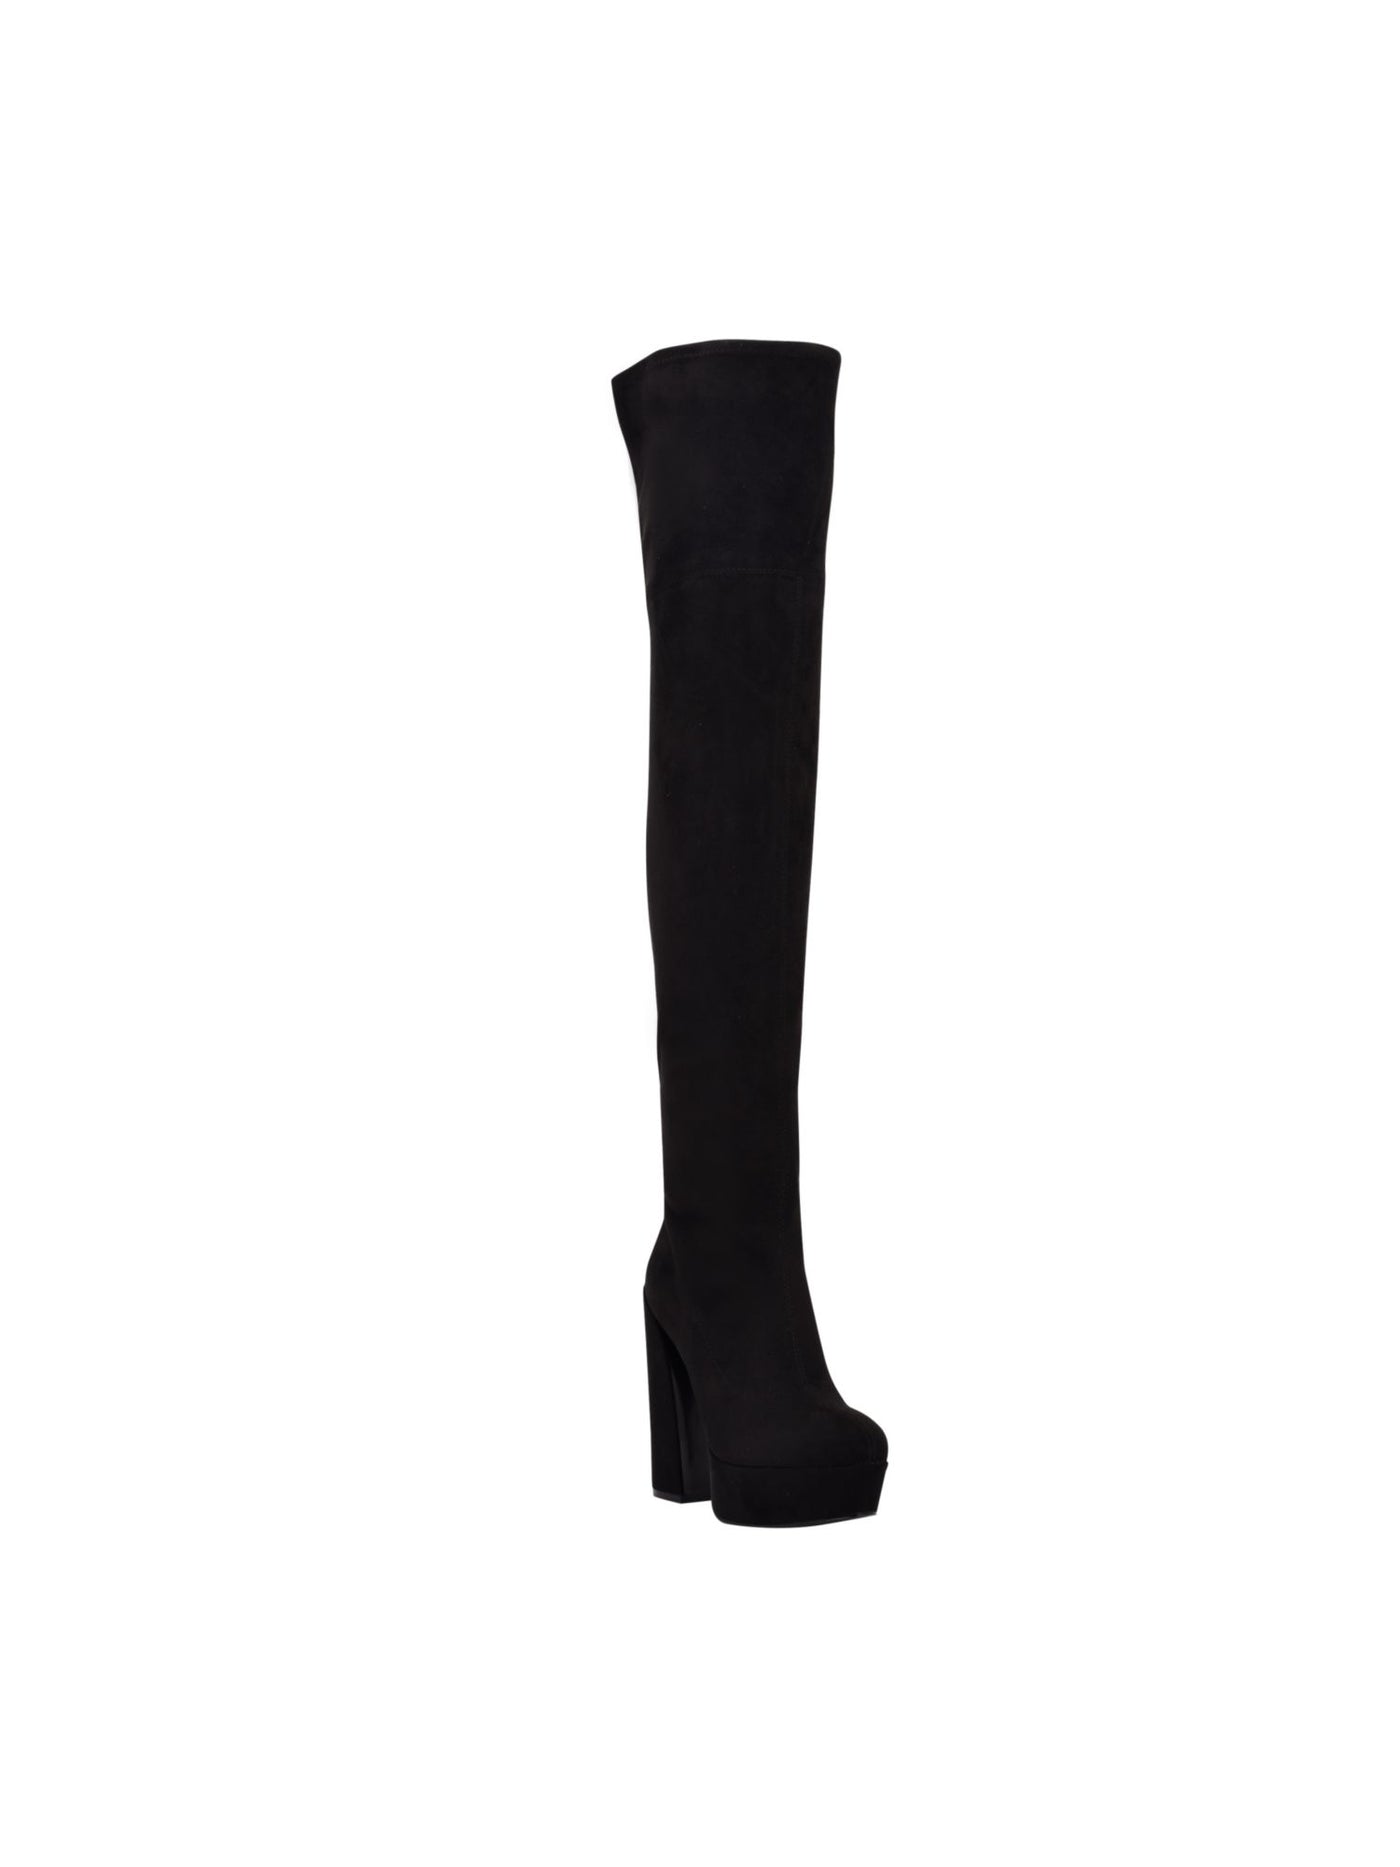 GUESS Womens Black 1" Platform Stretch Padded Cristy Almond Toe Block Heel Zip-Up Dress Boots 11 M